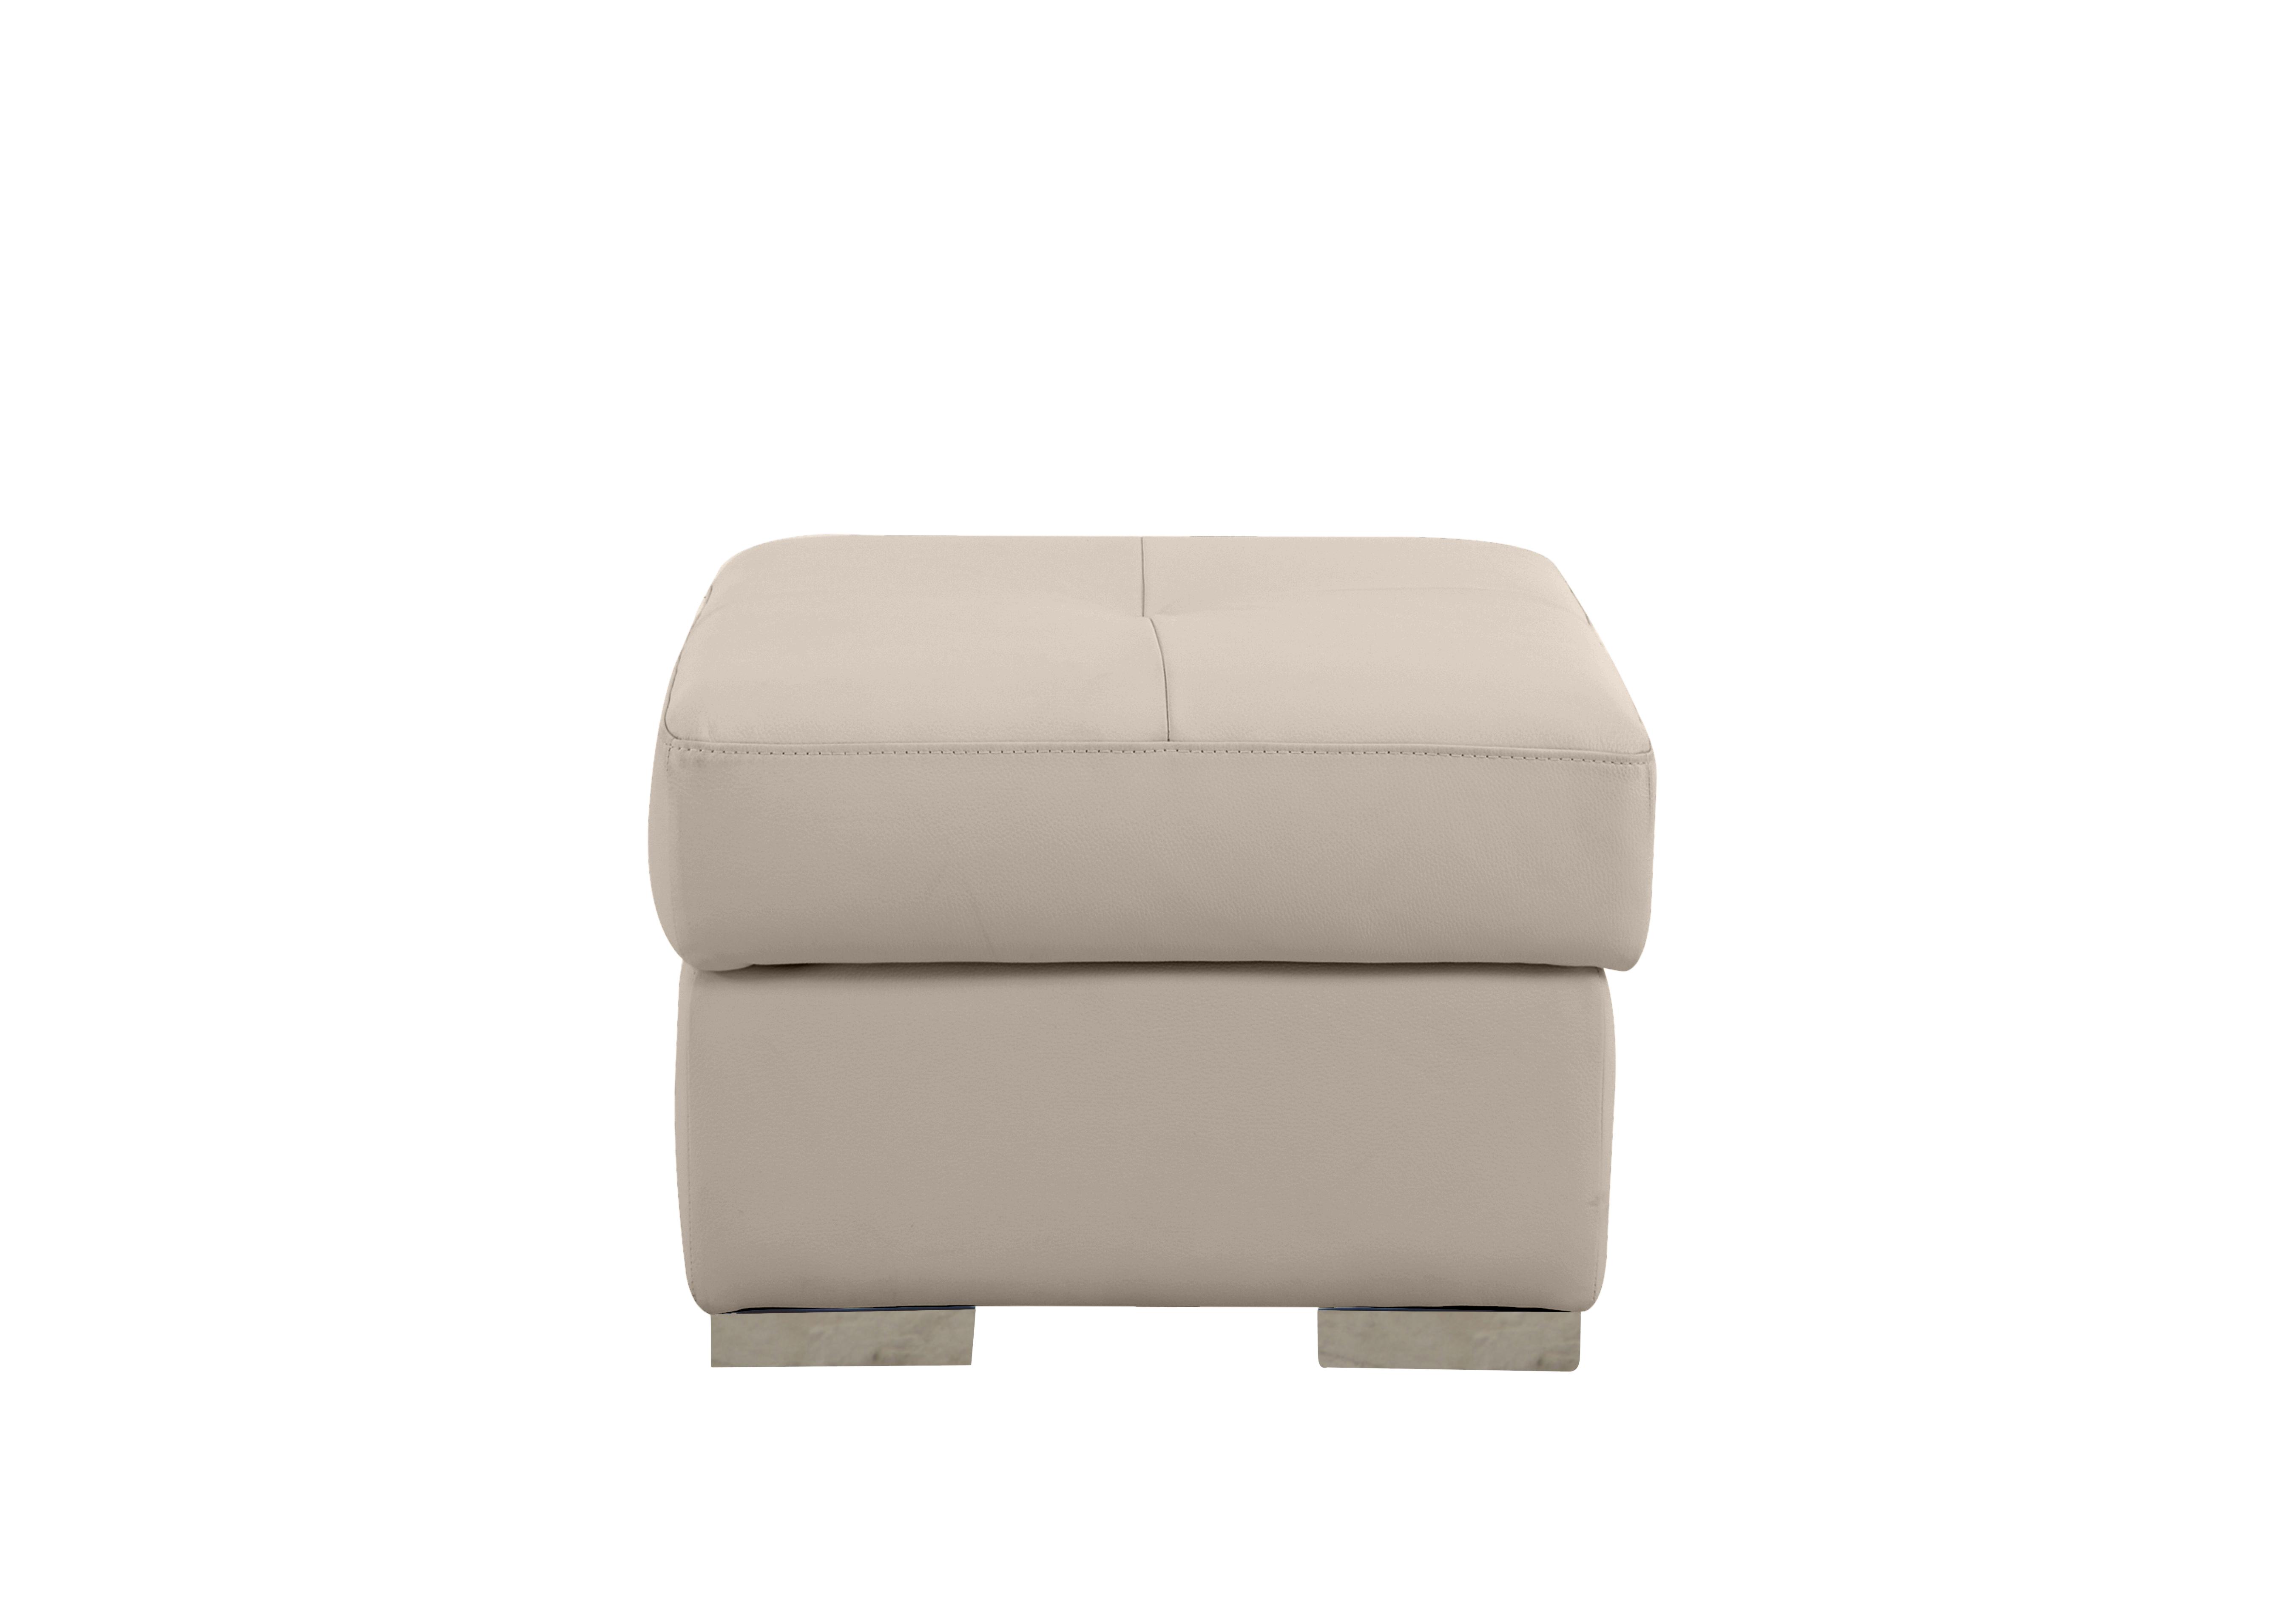 Galileo Leather Storage Footstool in Botero Crema 2156 Ch on Furniture Village